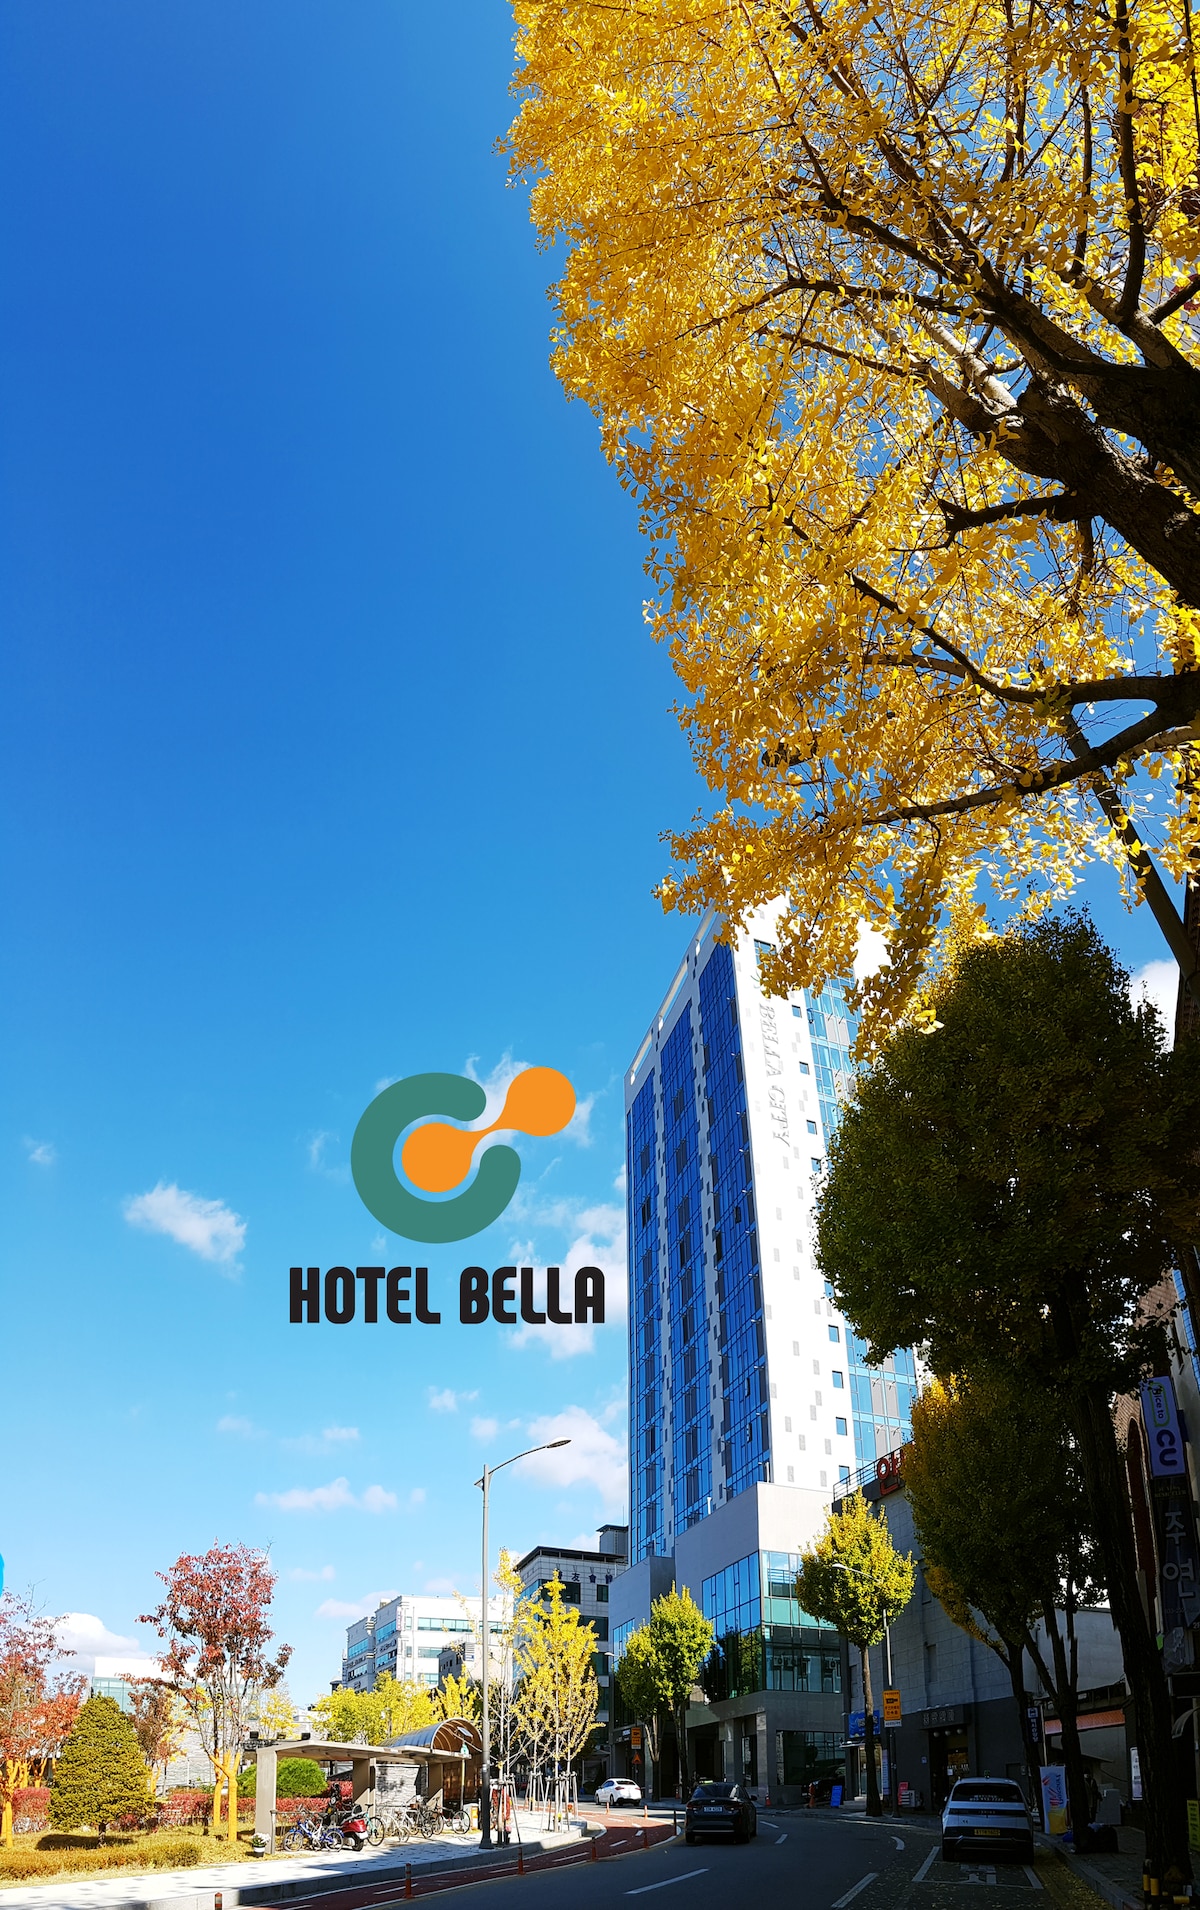 [Hotel Bella] 910城市景观，河景，乐高乐园景观，毗邻春川市政厅